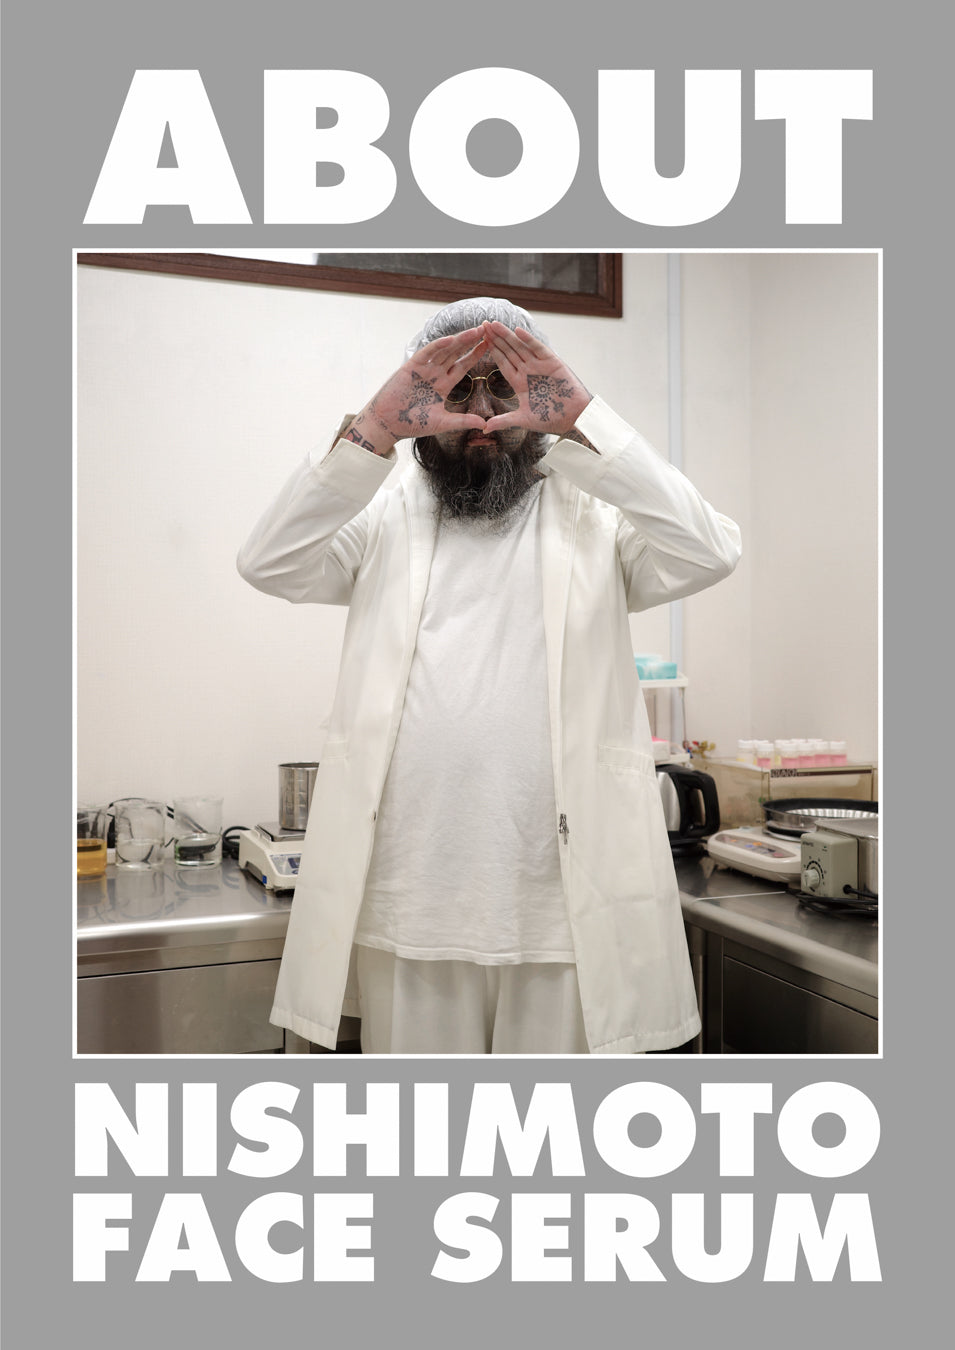 NISHIMOTO IS THE MOUTH NISHIMOTO FACE SERUM